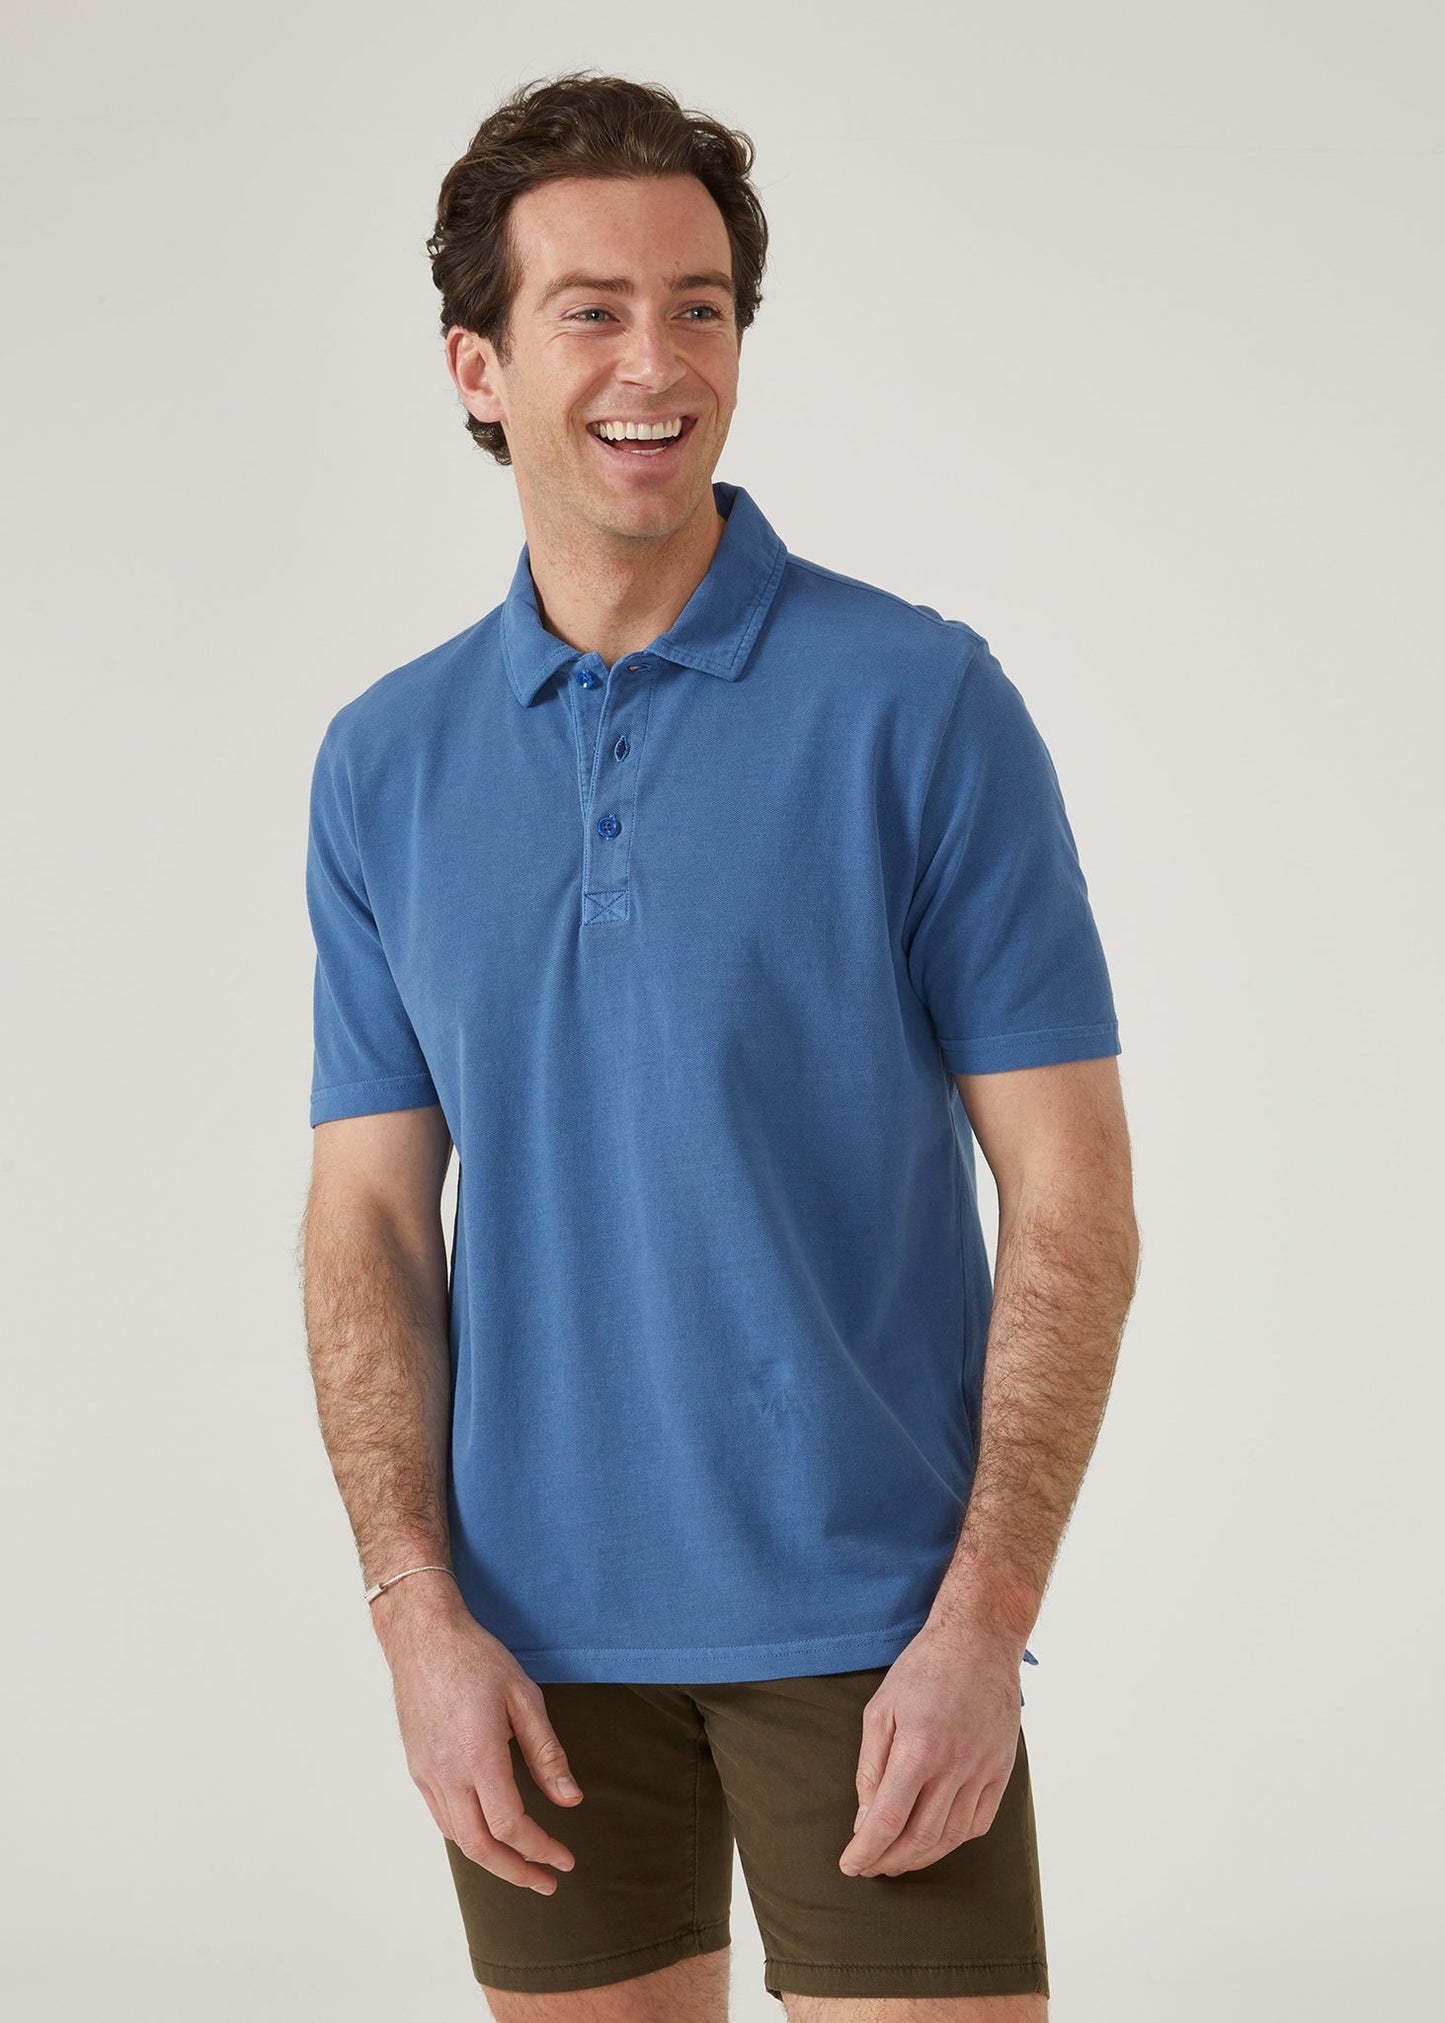 peruvian cotton short sleeve polo shirt in regatta blue.